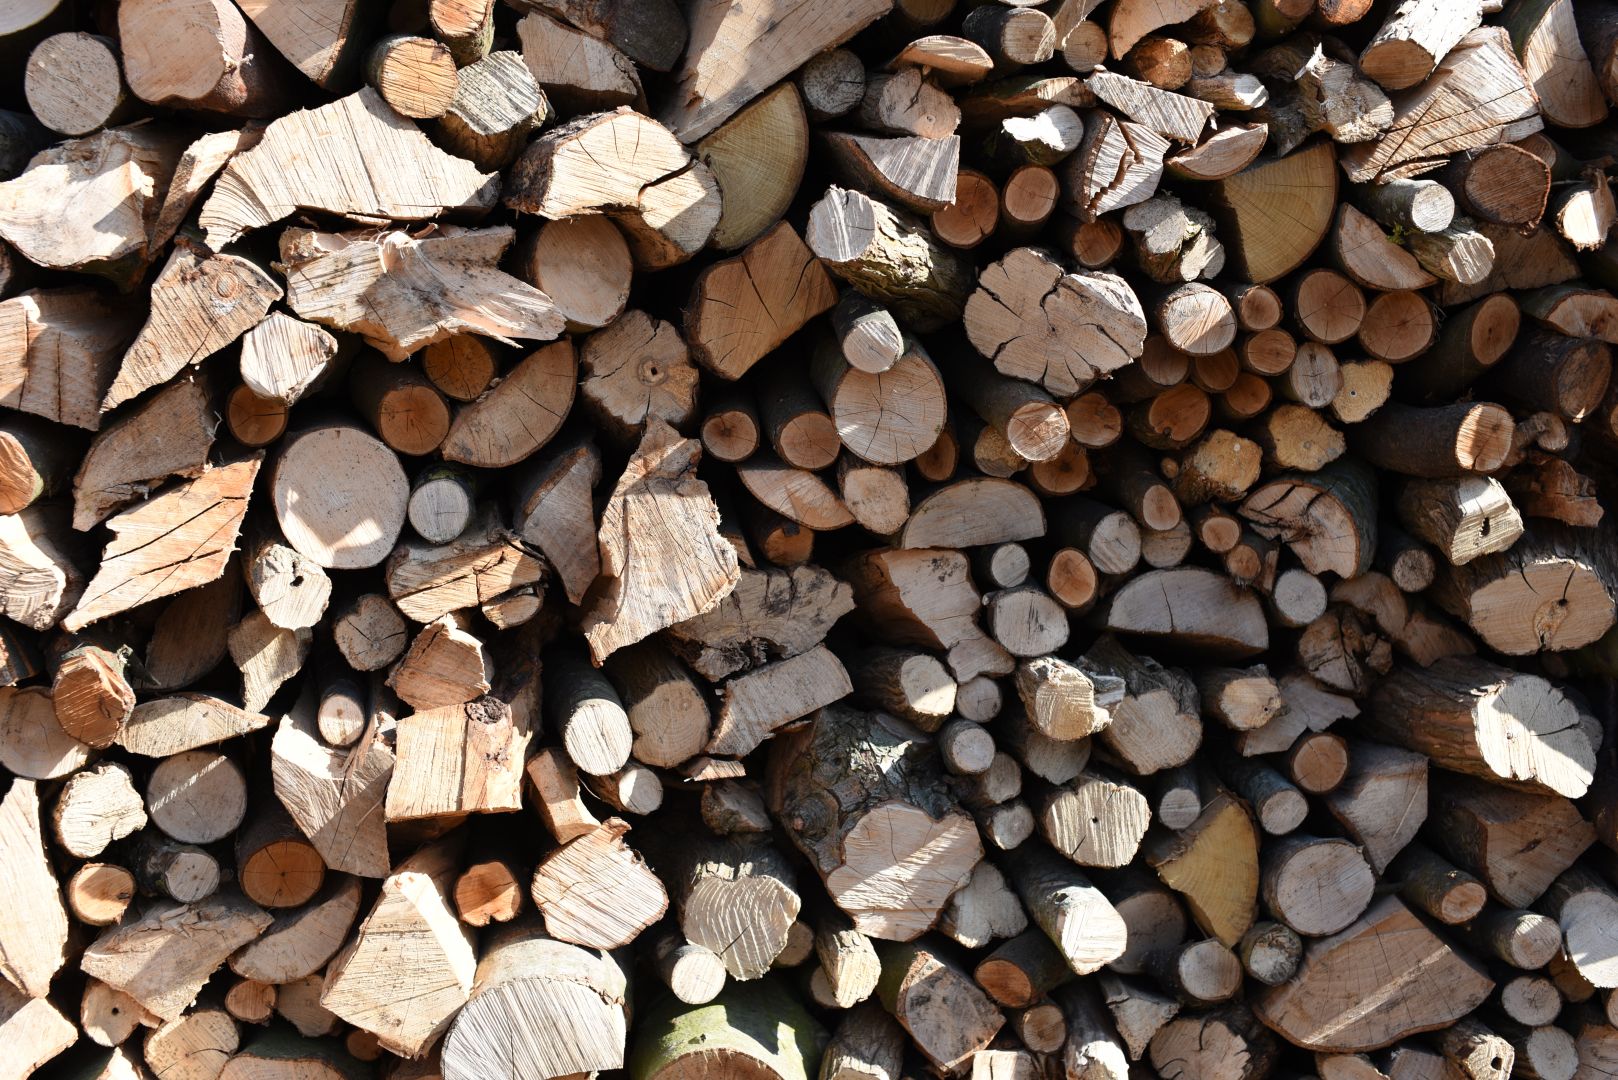 Unseasoned hardwood logs